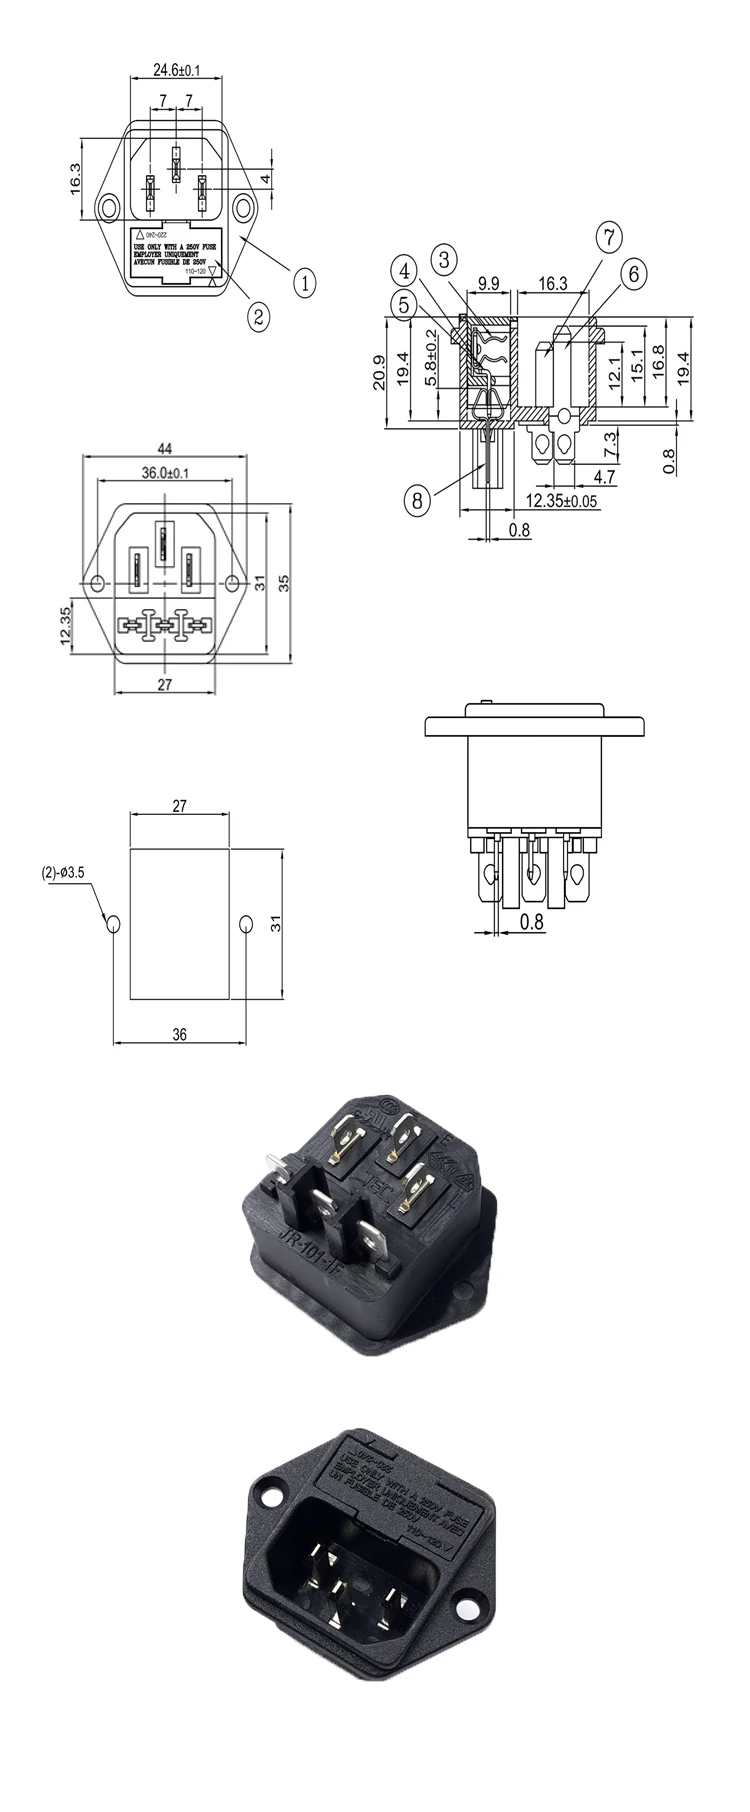 Hot sales IEC JR-101-1F(N) 10A 250V black AC POWER SOCKET Mount Plug Adapter